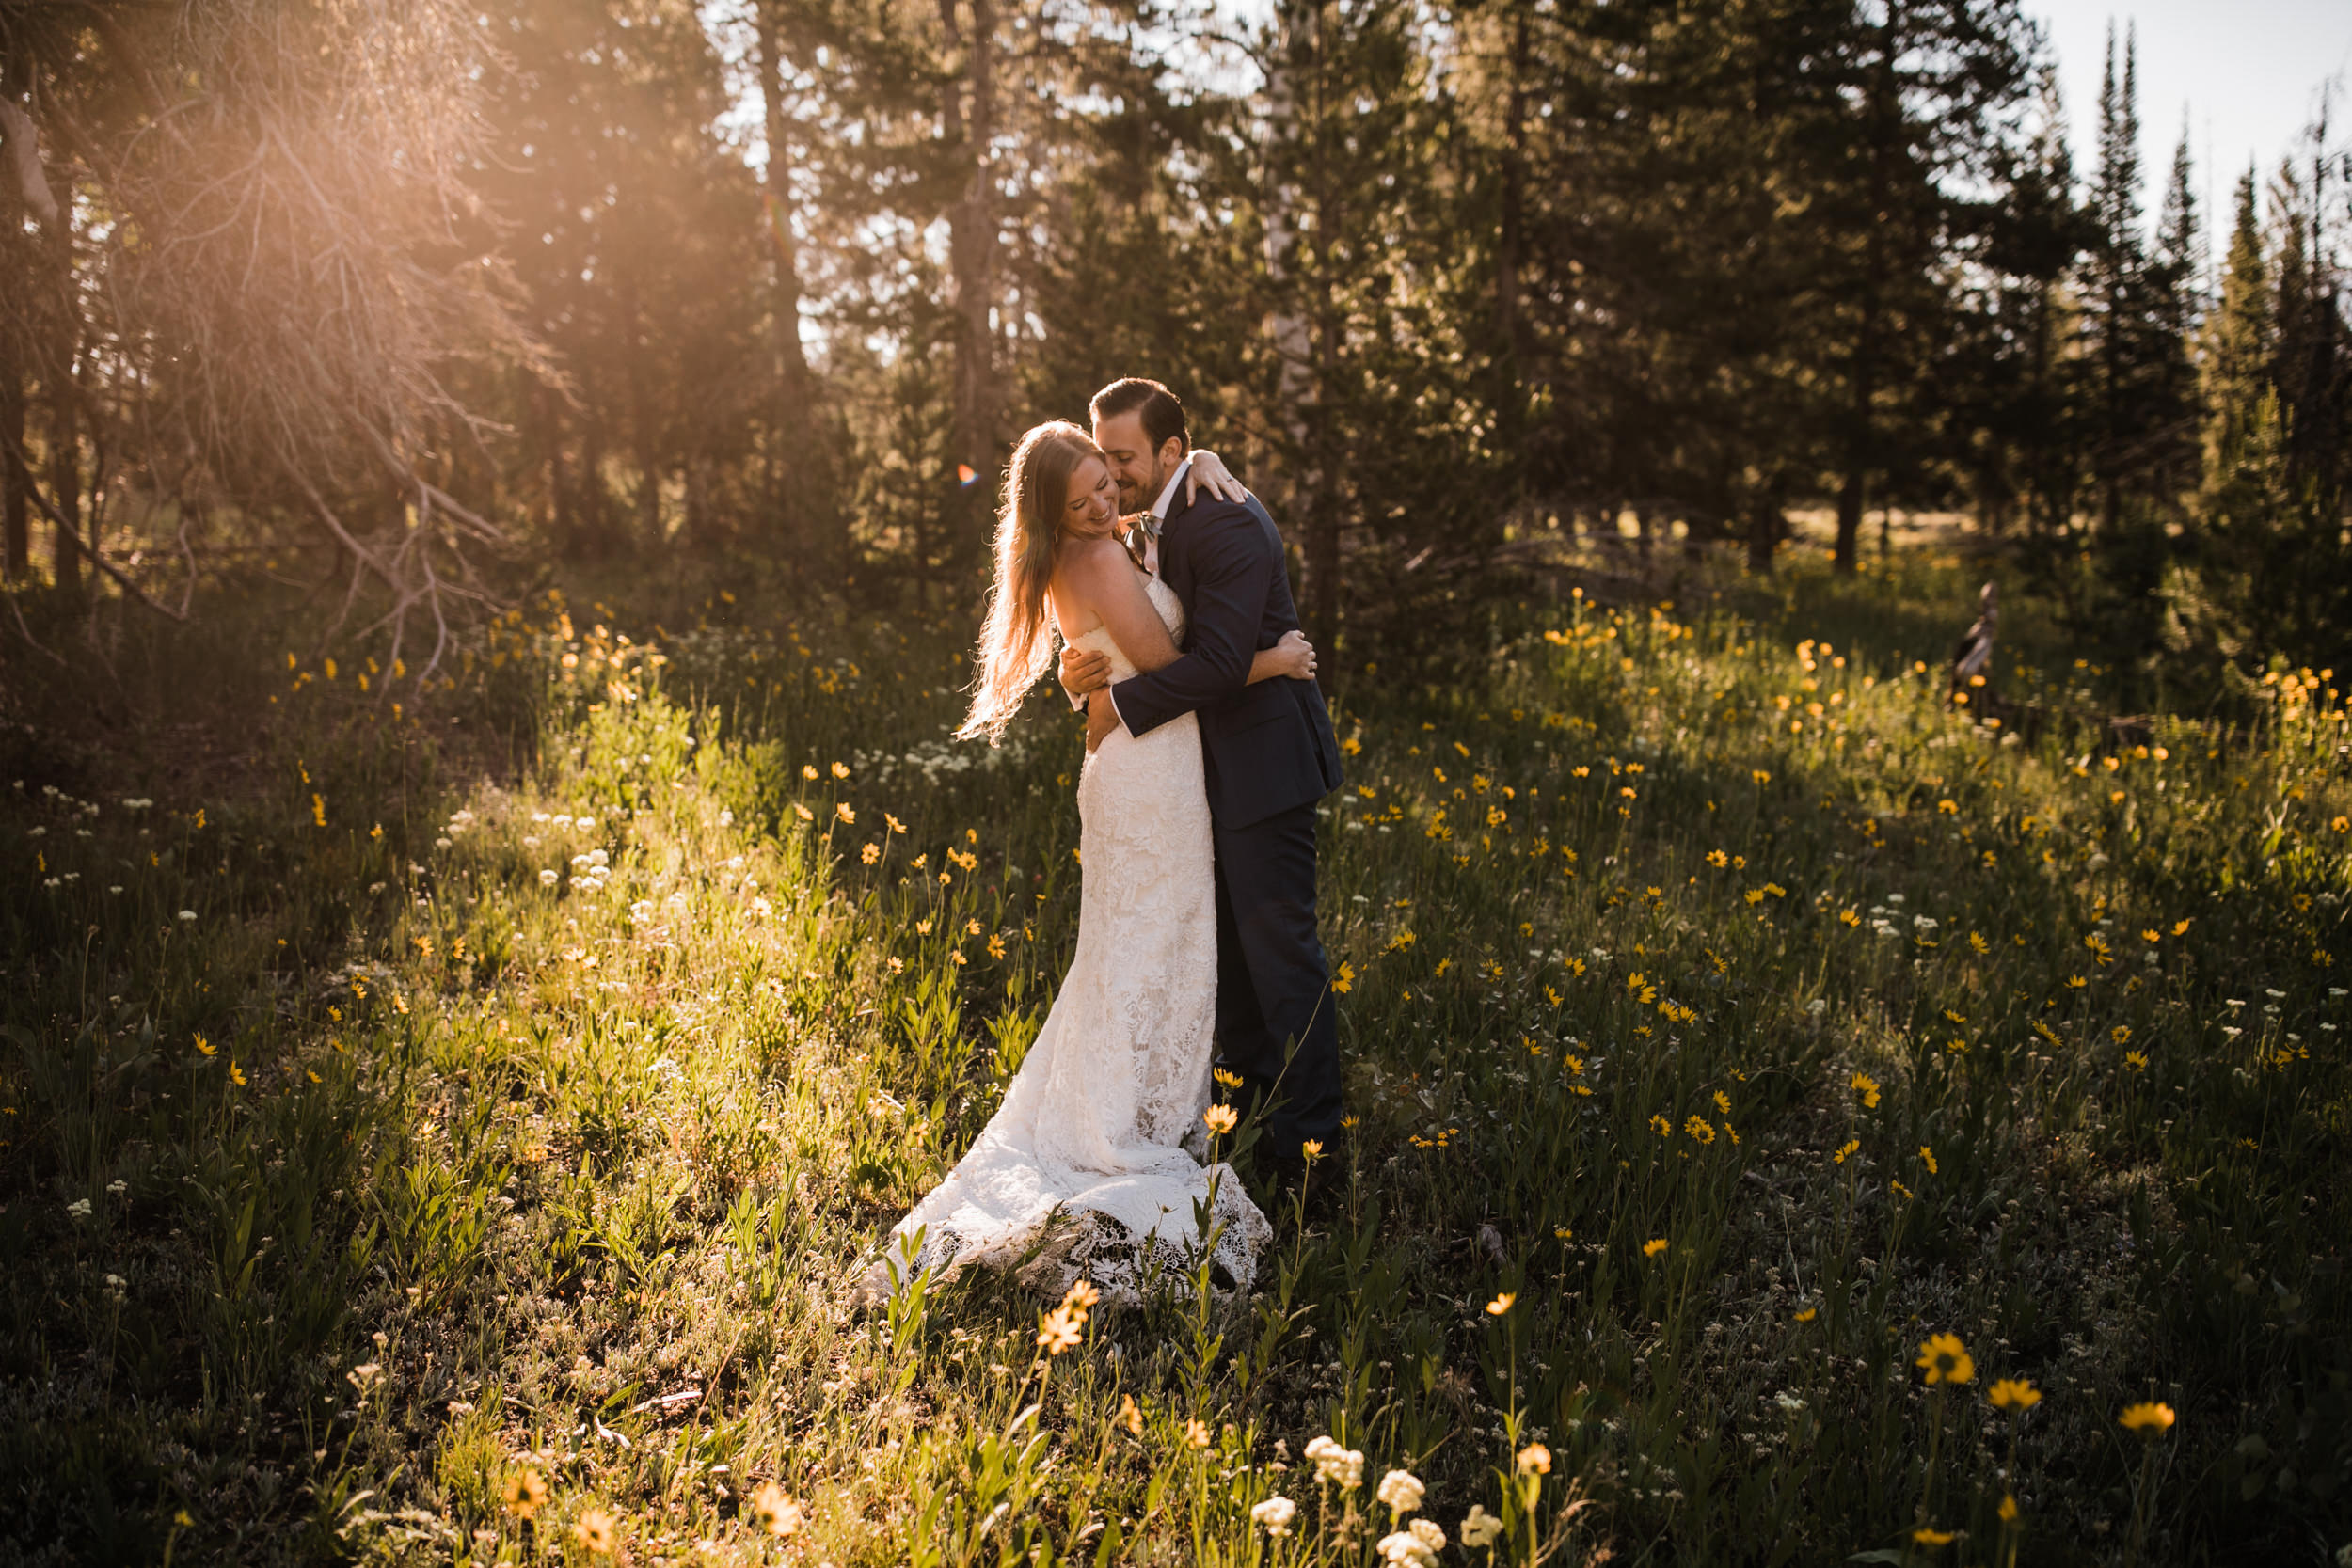 tara + david's post-wedding adventure portrait session in grand teton national park | jackson, wyoming wedding photographer | the hearnes adventure photography